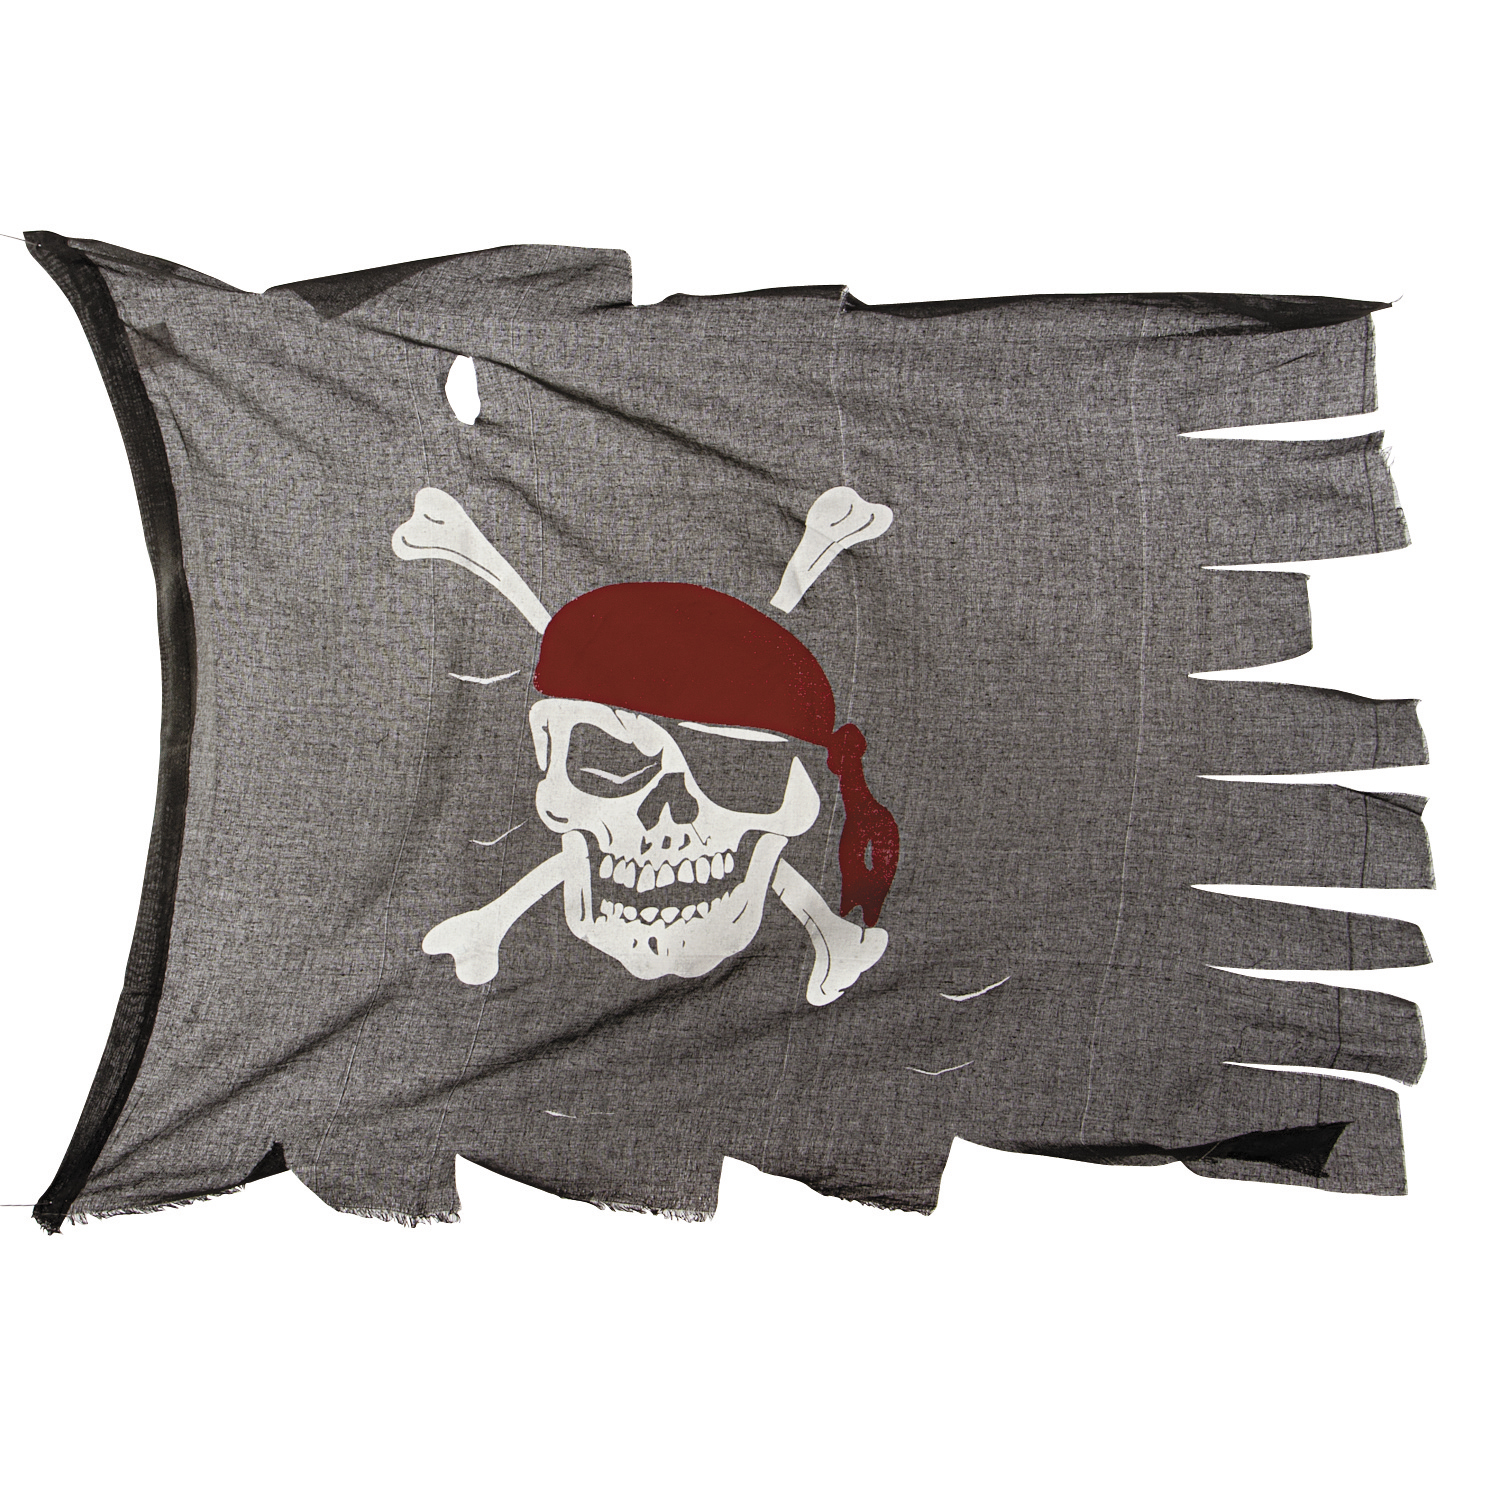 https://www.cama24.com/media/image/85/31/b7/pirat-piraten-flagge-fahne-mit-totenkopf-zerfetzt-fur-piratenparty-101470.jpg